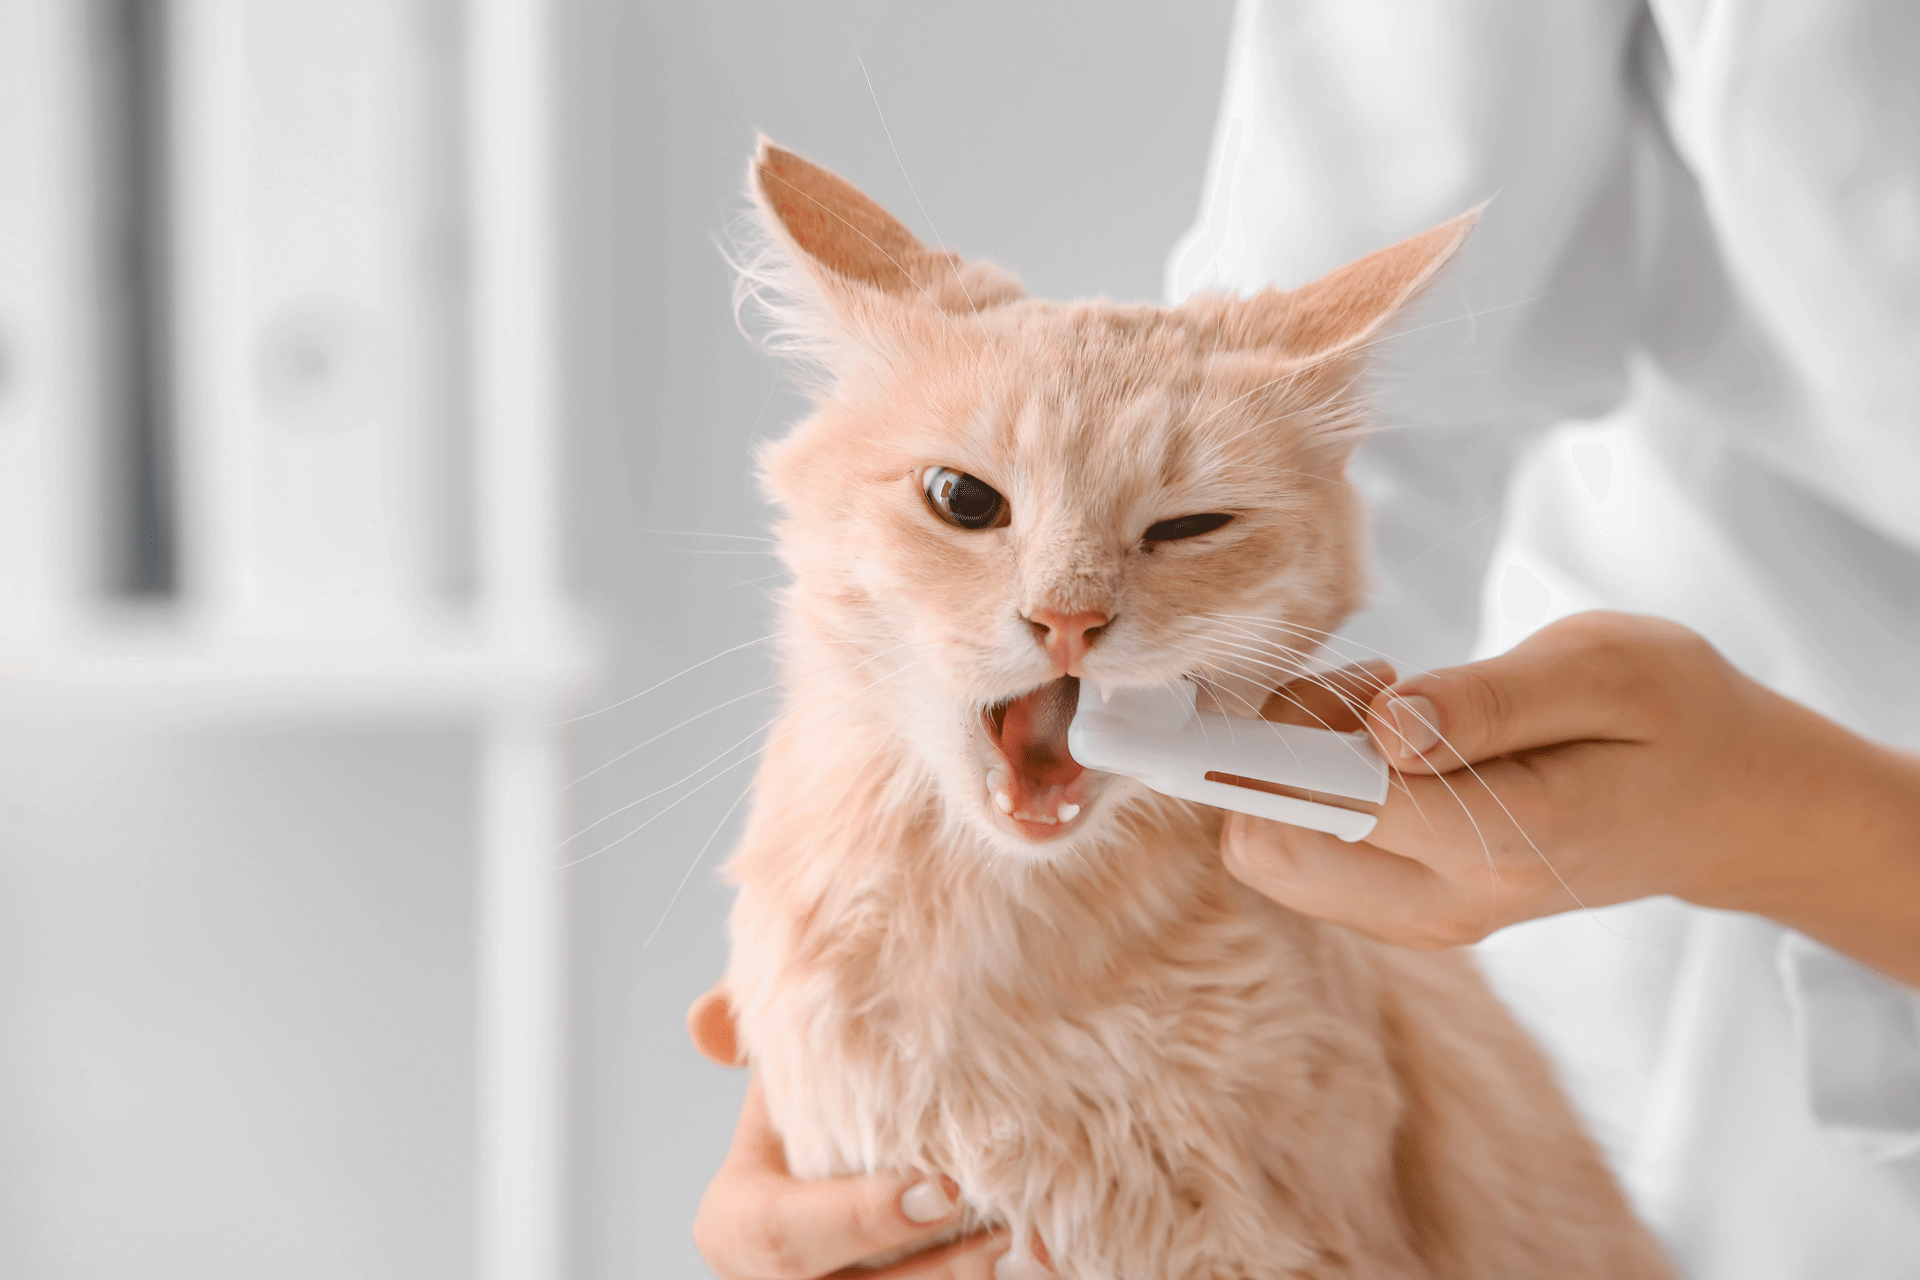 Vet brushing cat teeth